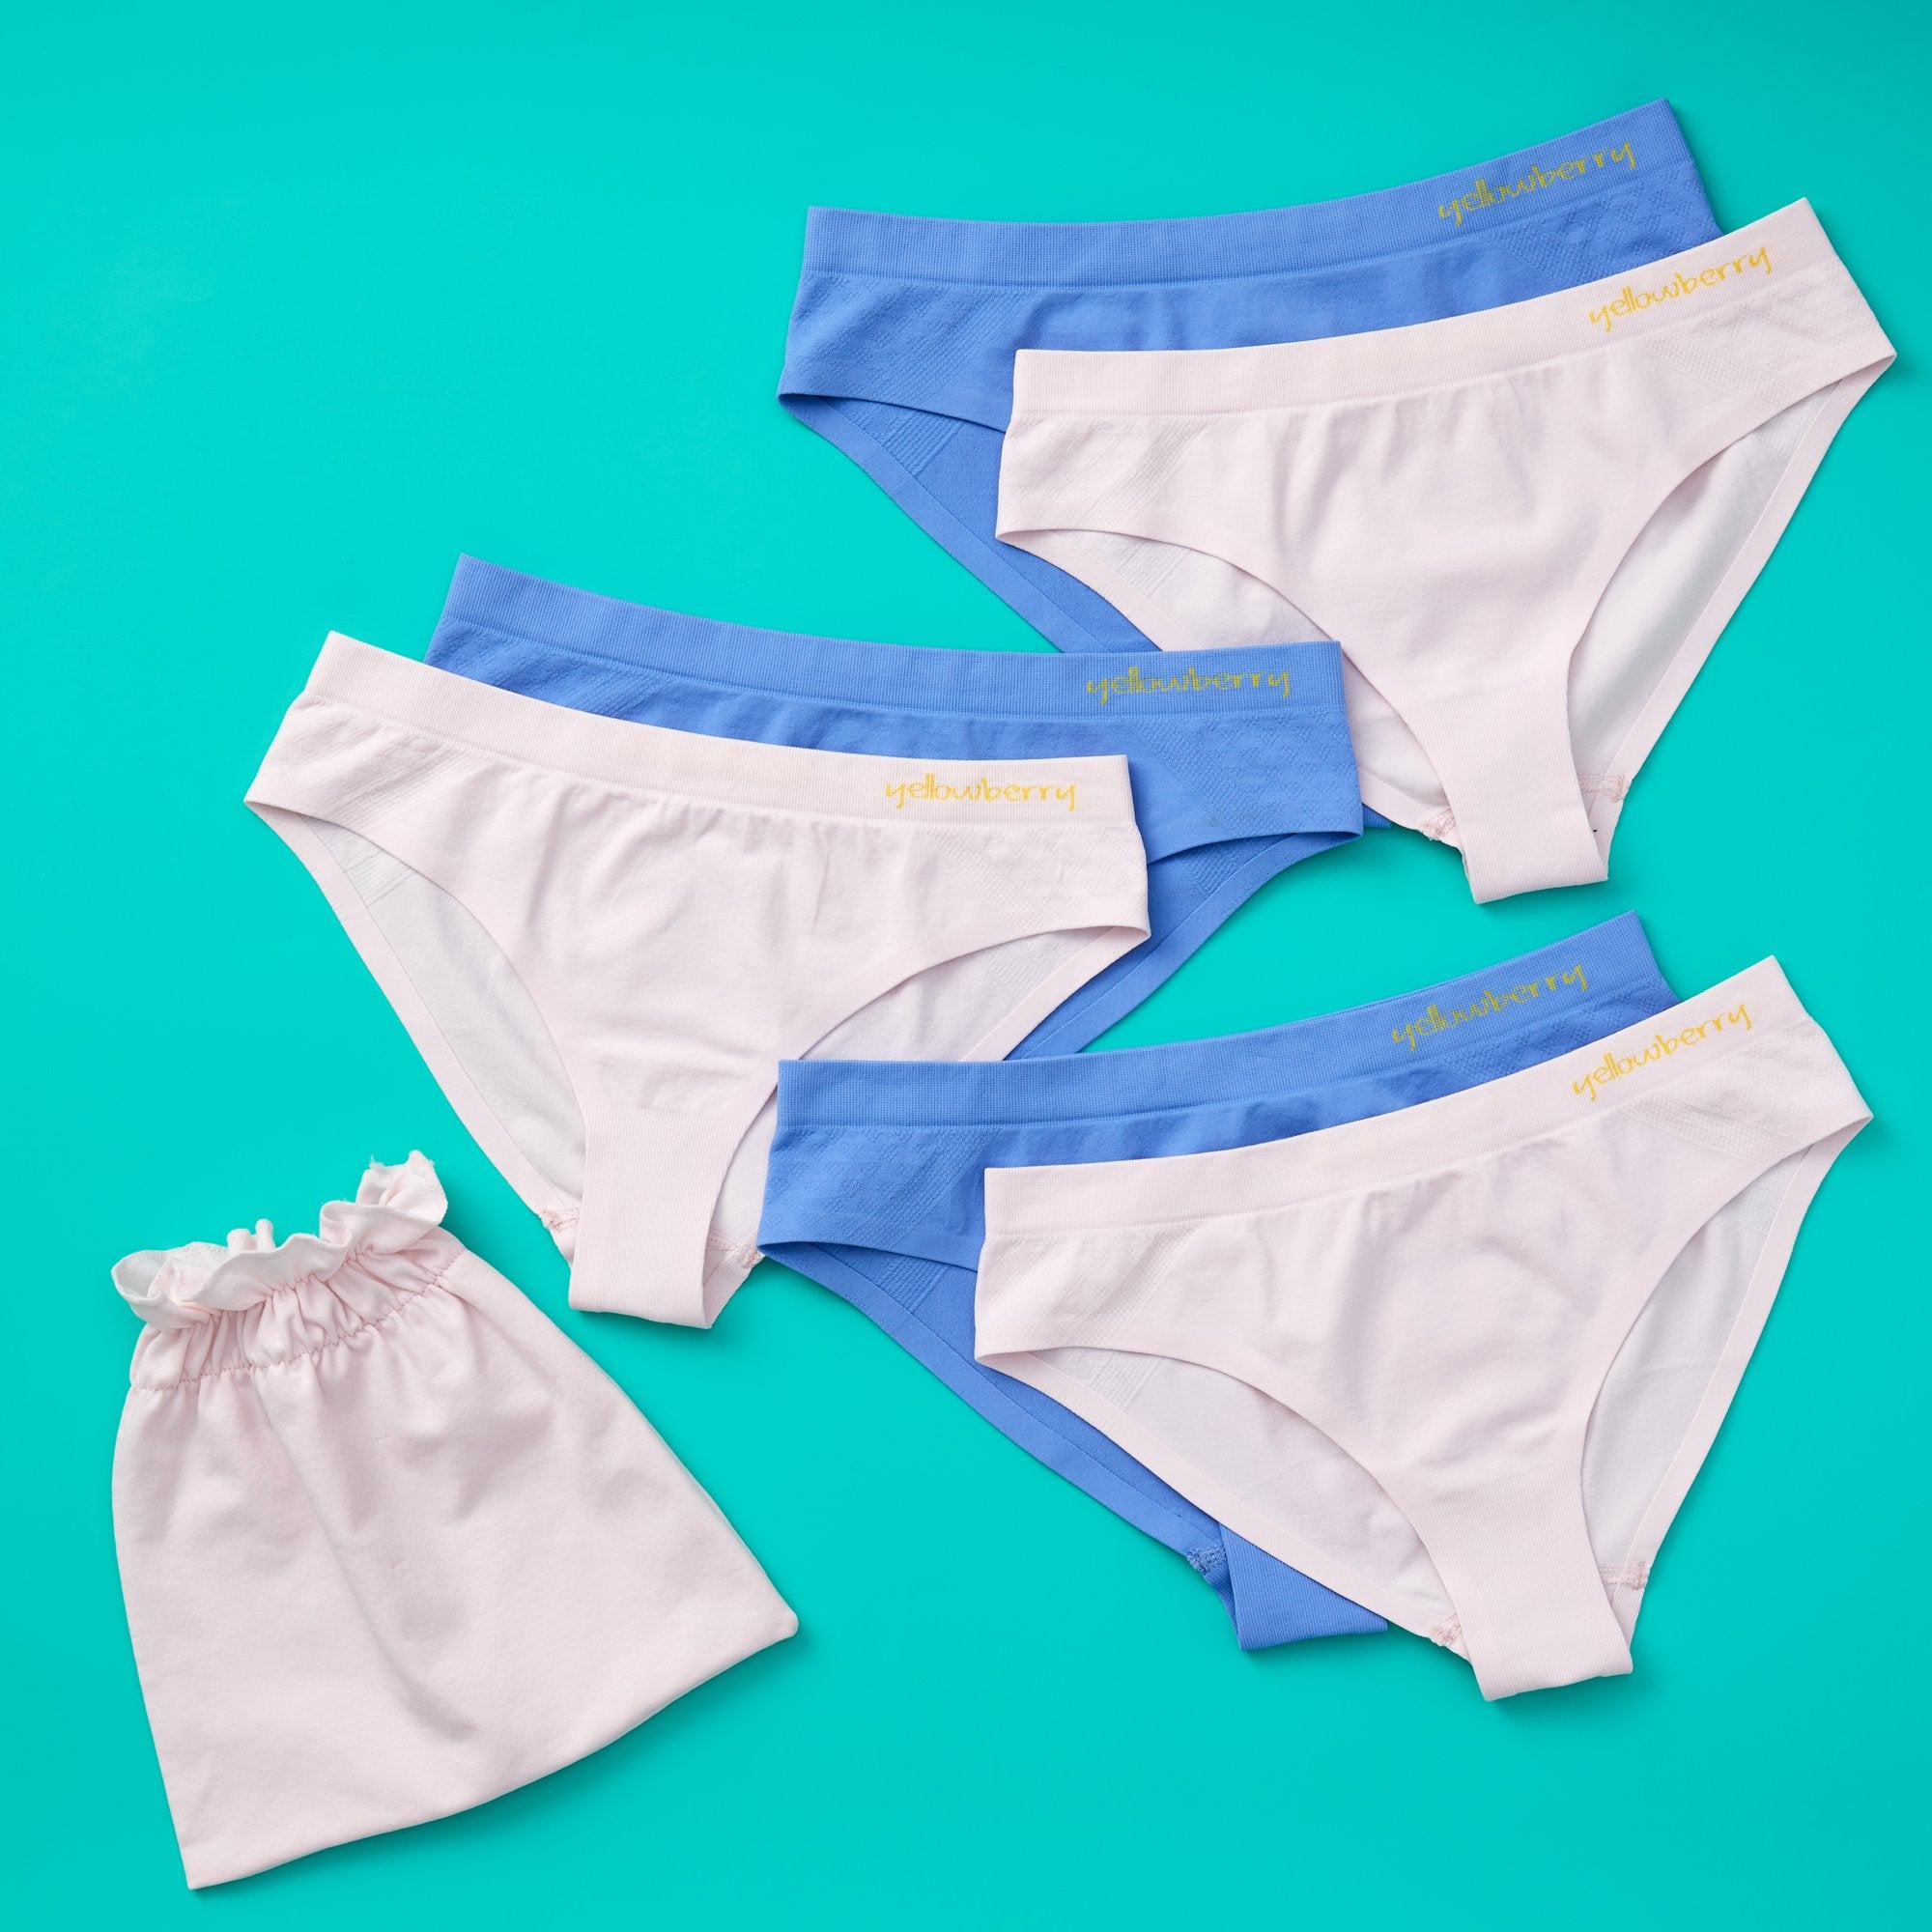  Yellowberry Simple Cotton Bikini Underwear Bundle 6PK